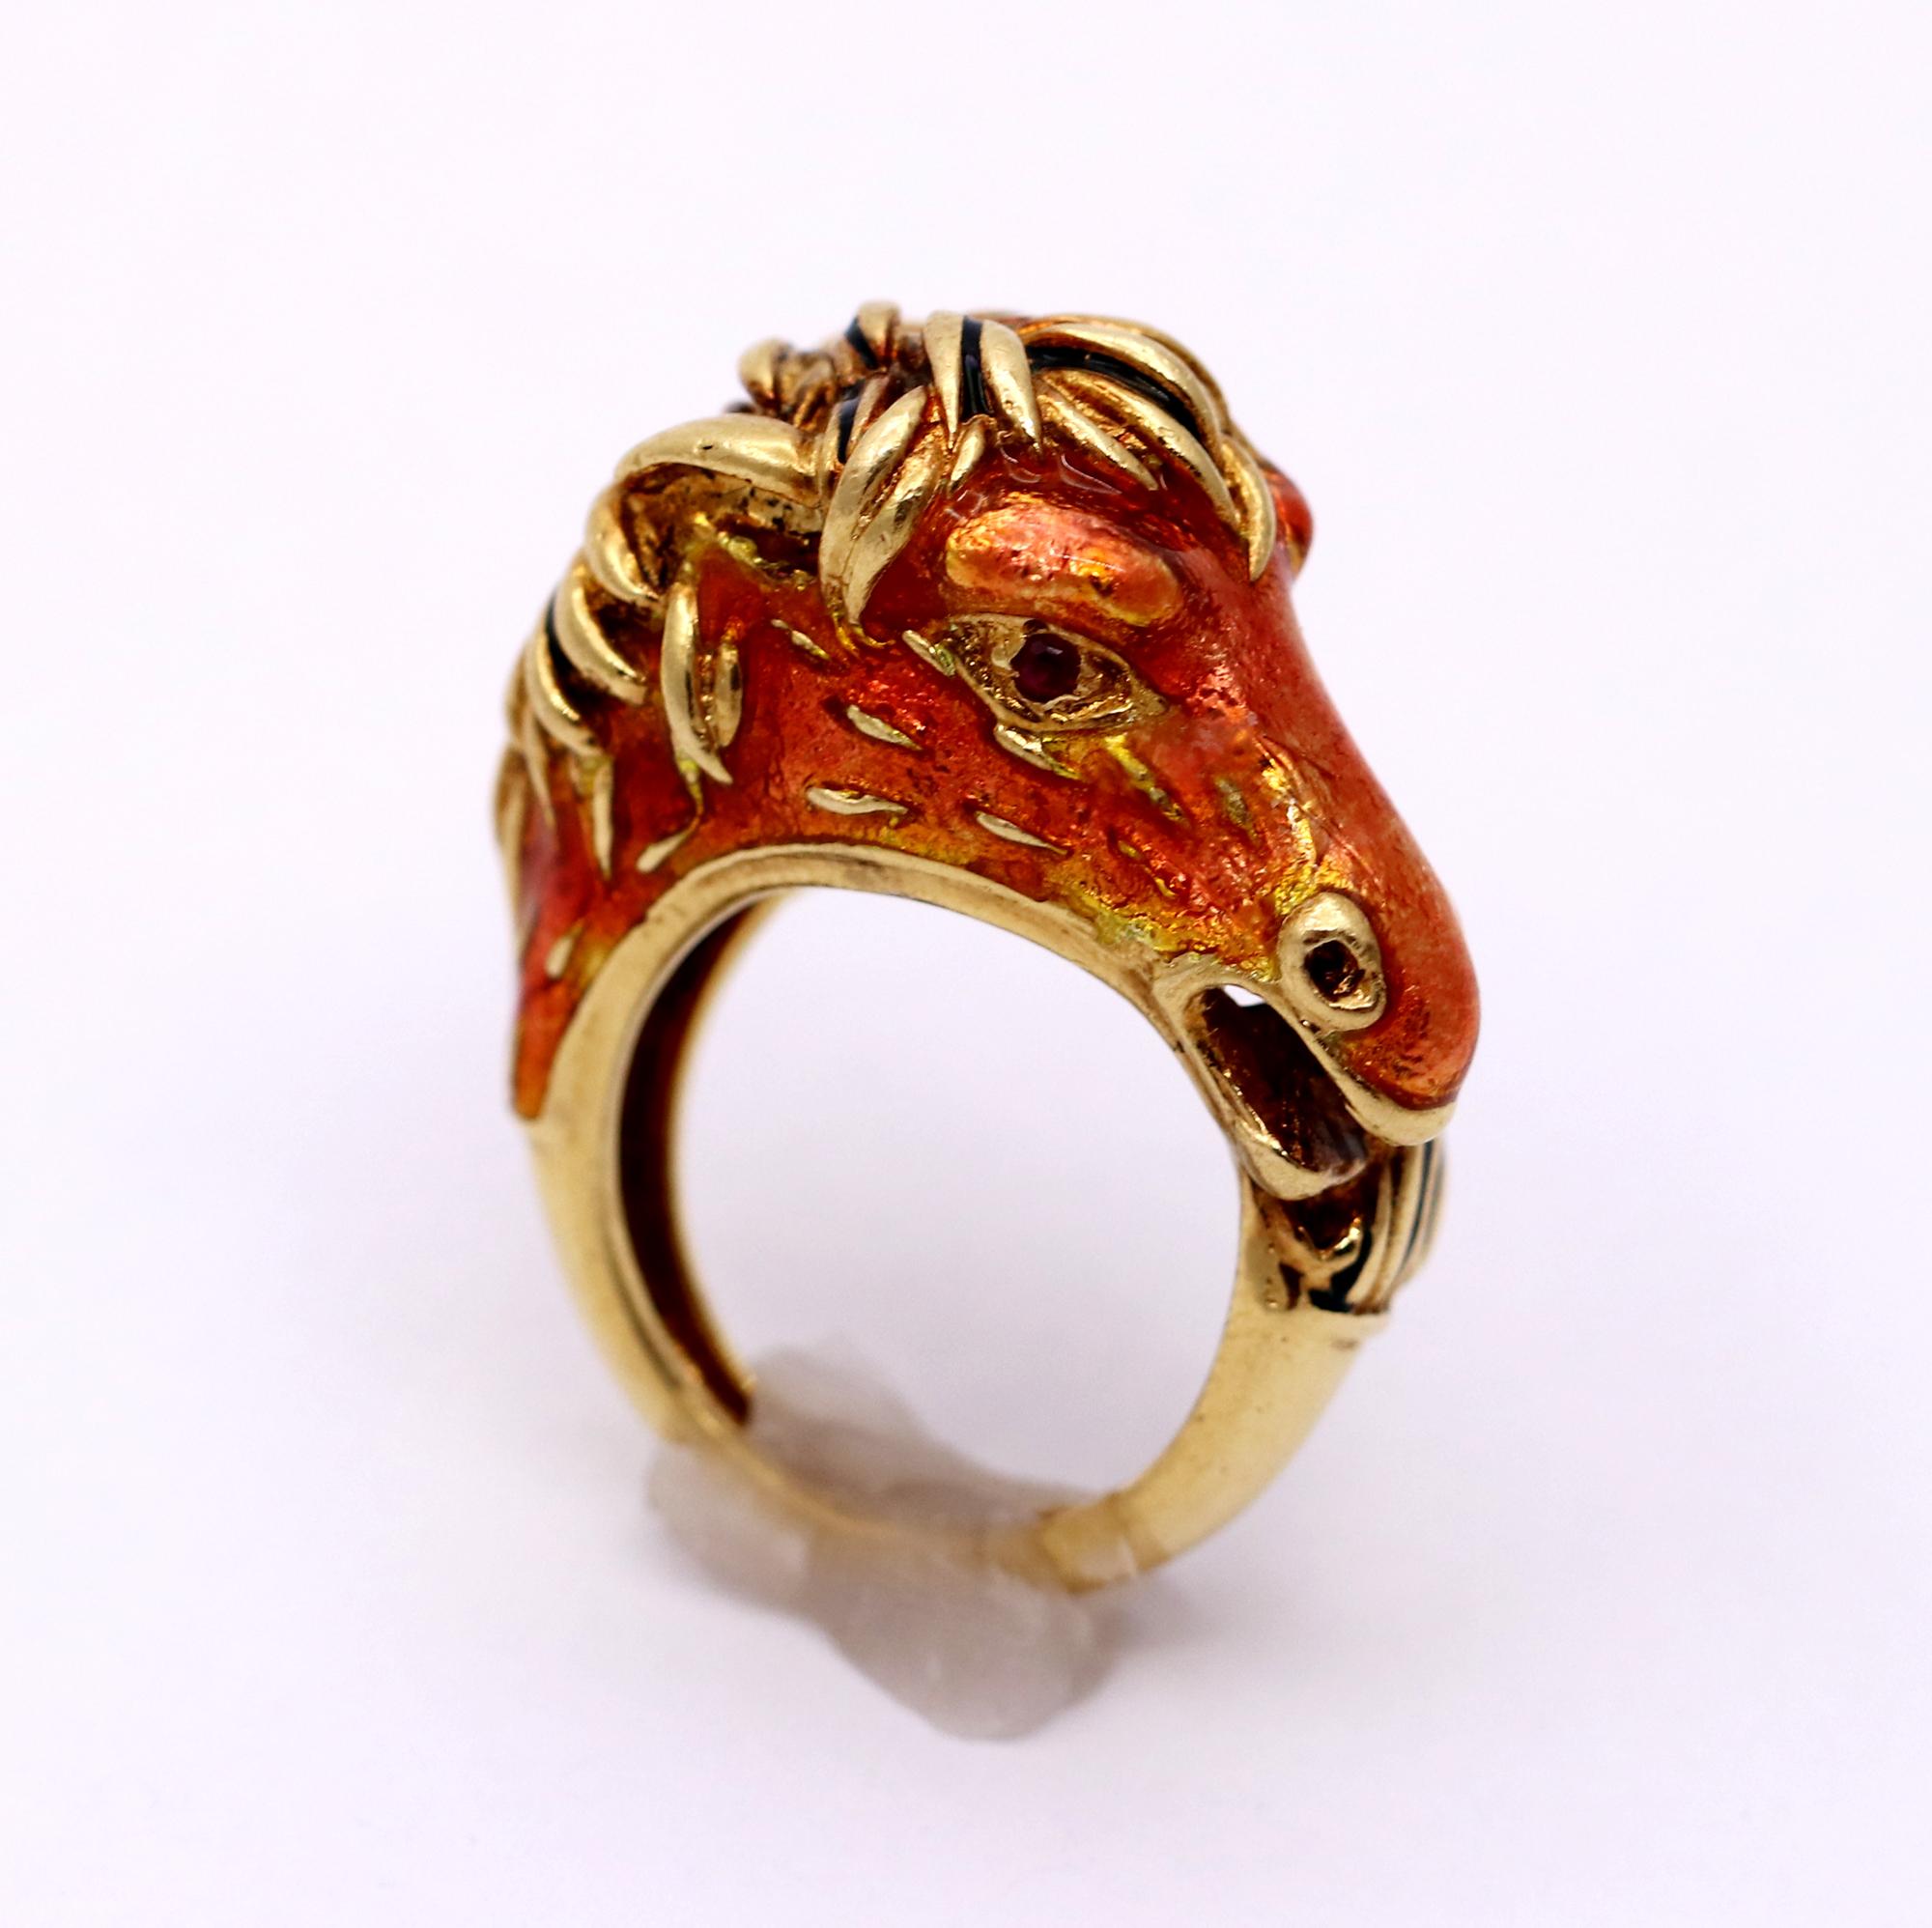 Round Cut Detailed Enamel Horse Ring by Frascarolo with Ruby Eyes